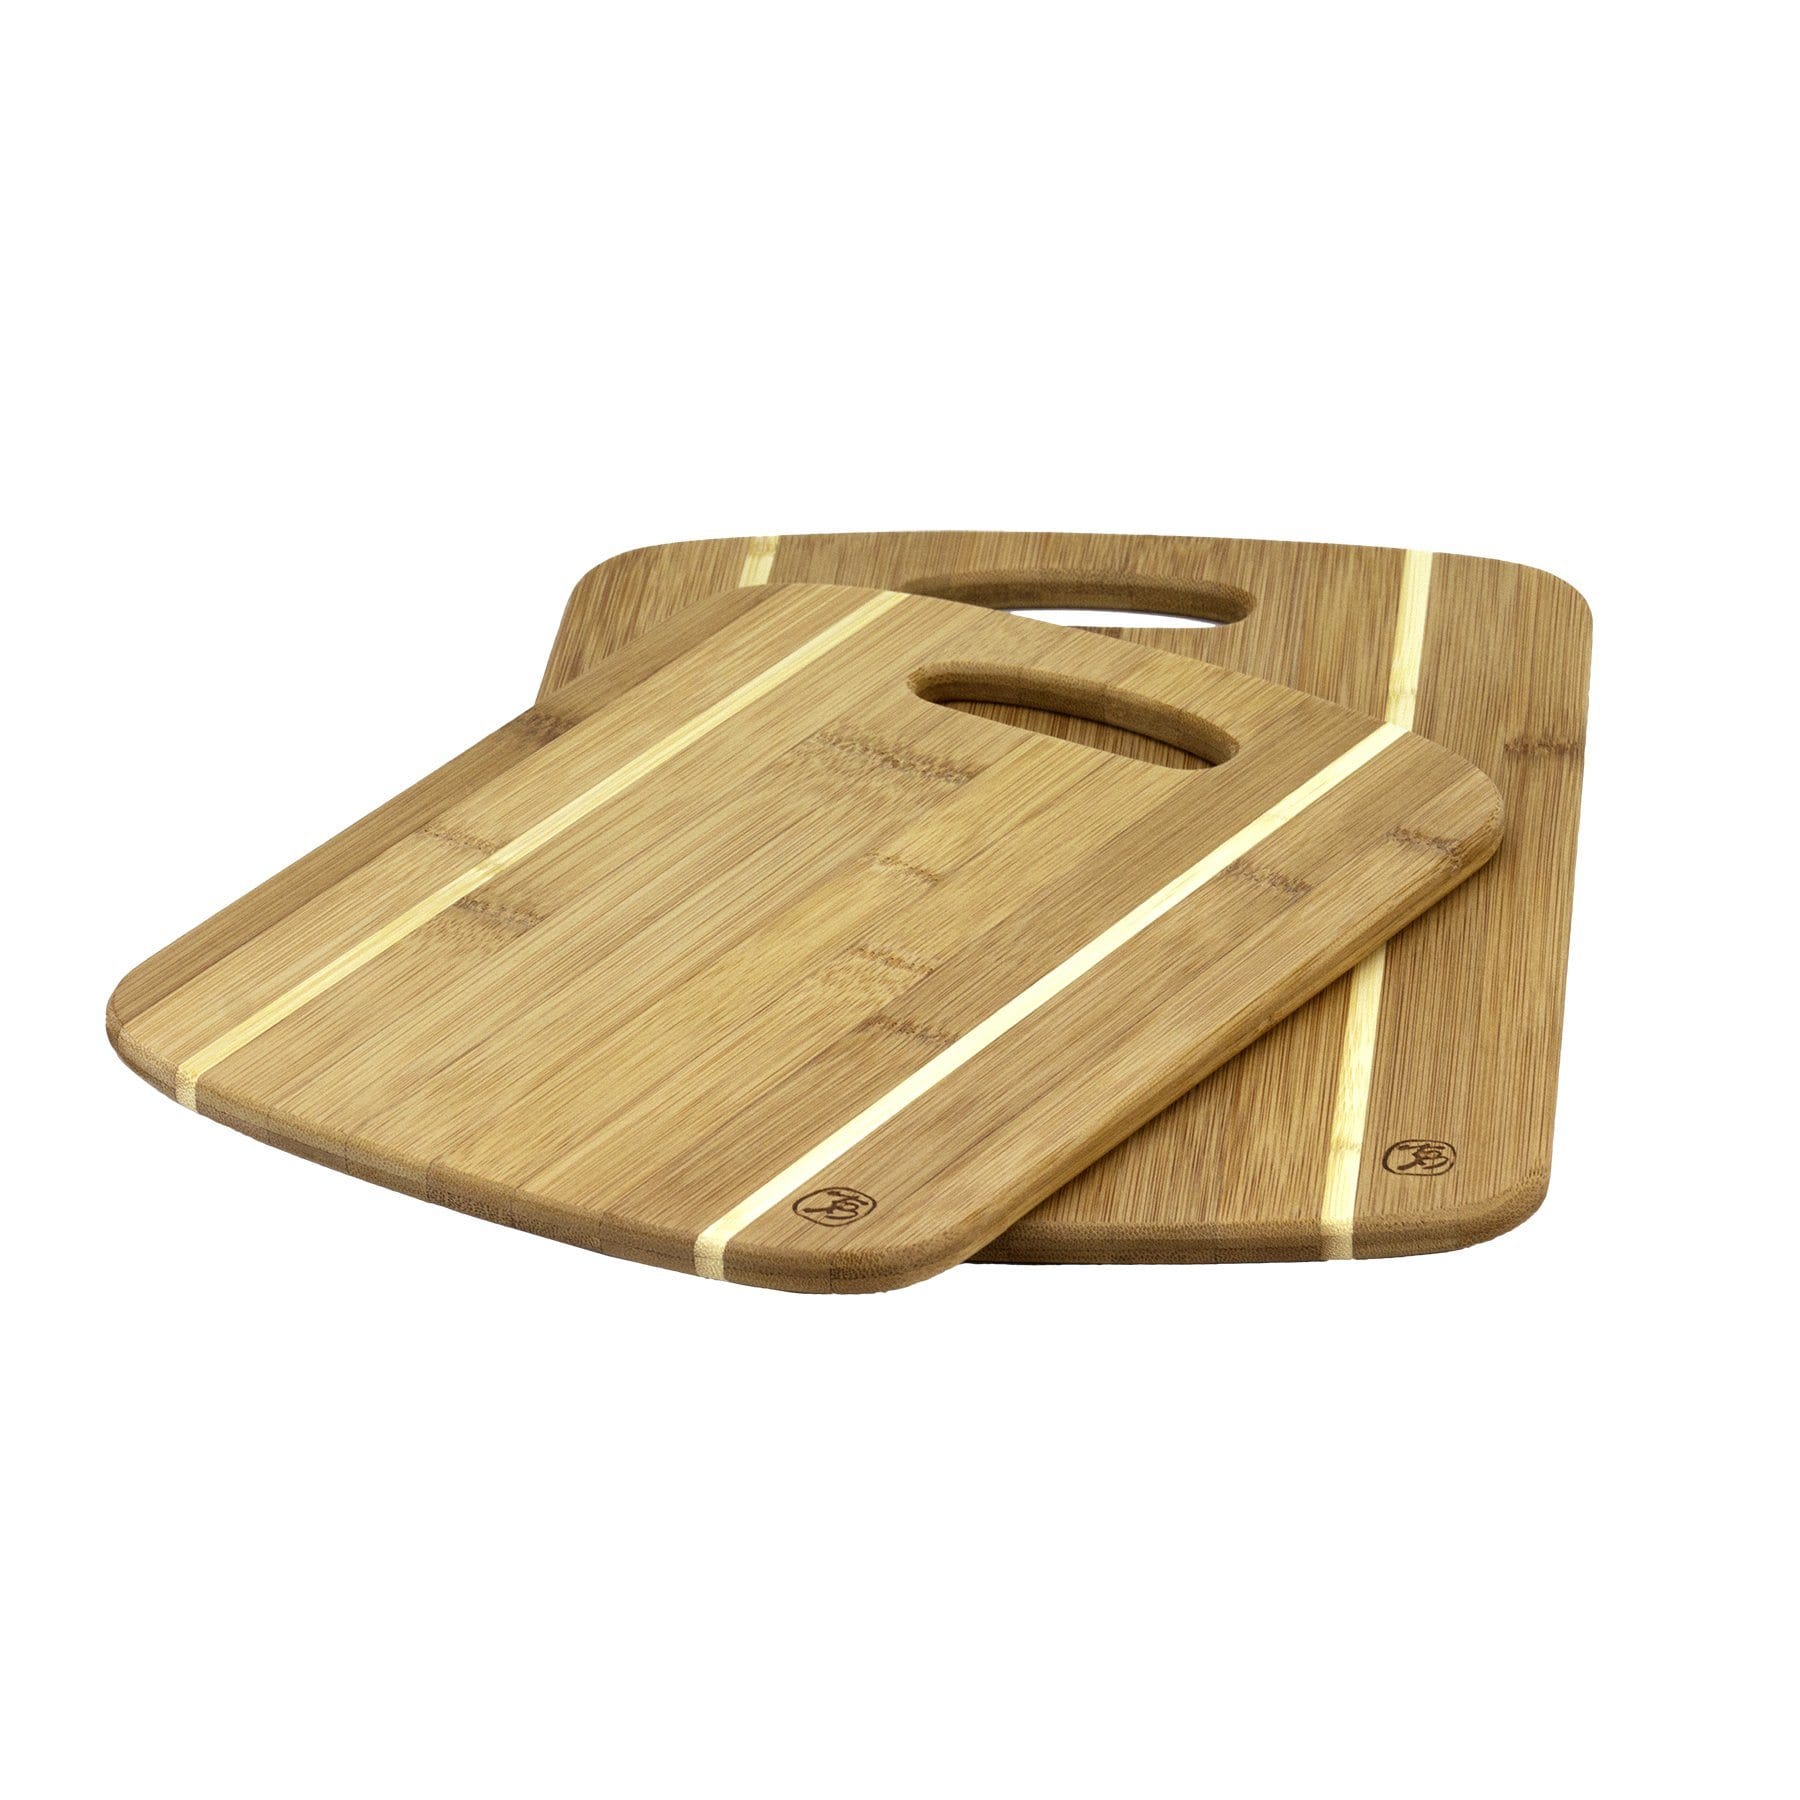 Oceanstar 3-Piece Bamboo Cutting Board Set